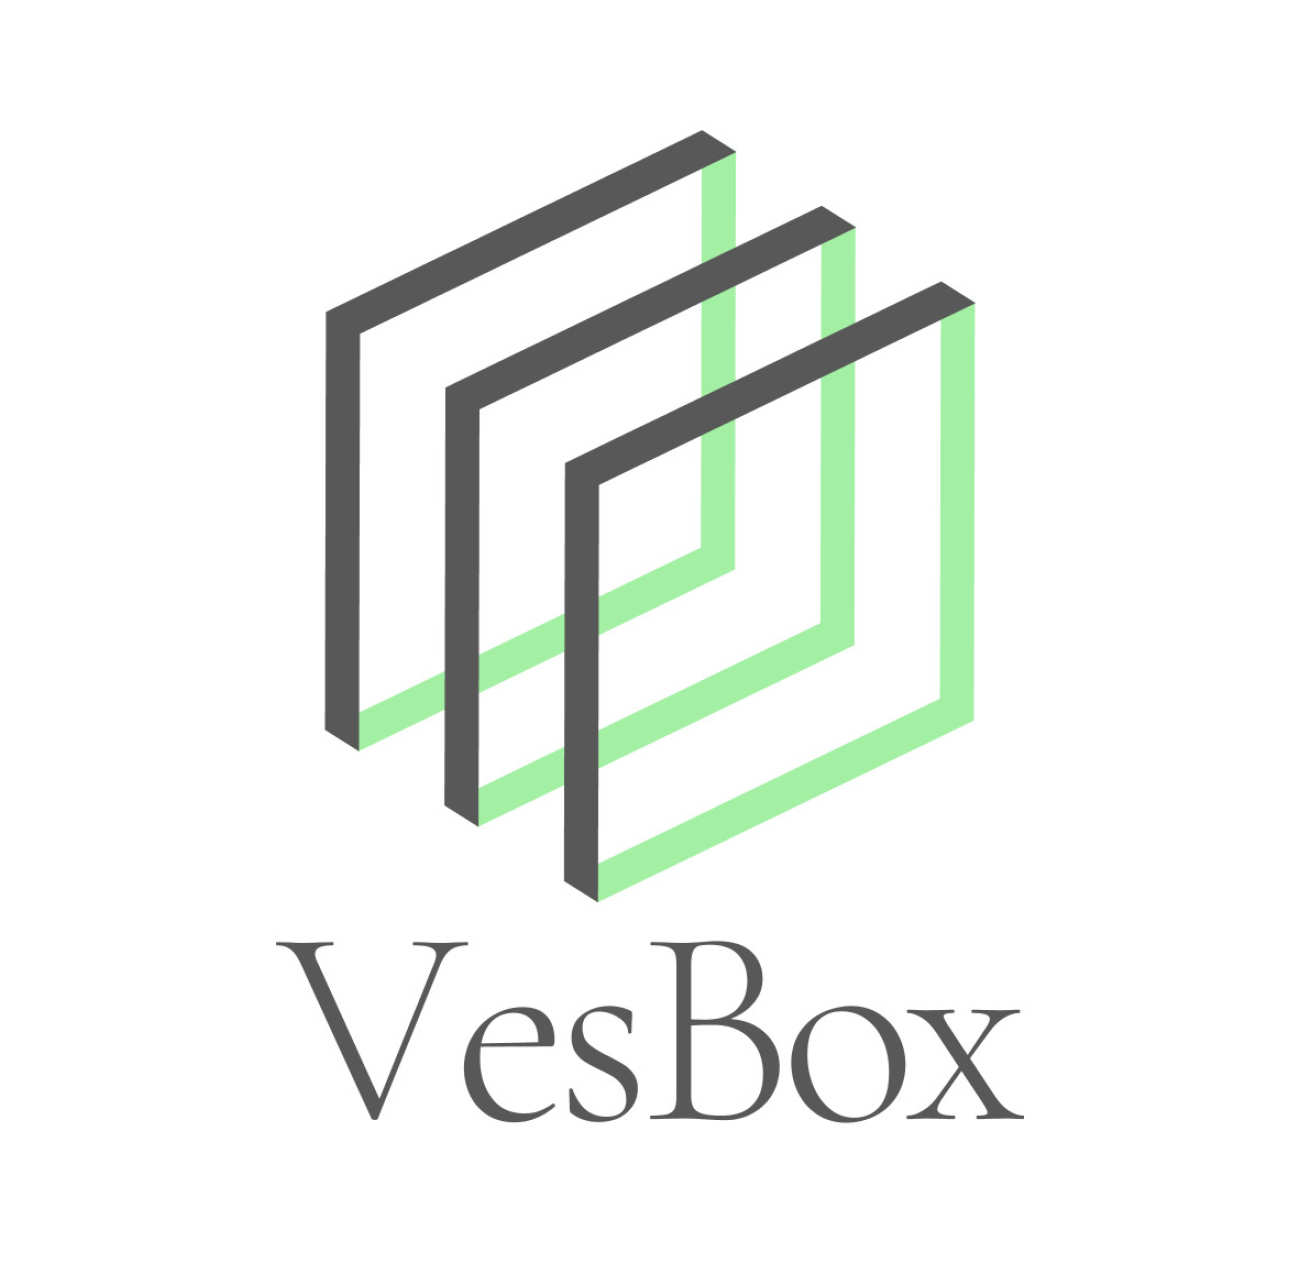 The VesBox logo